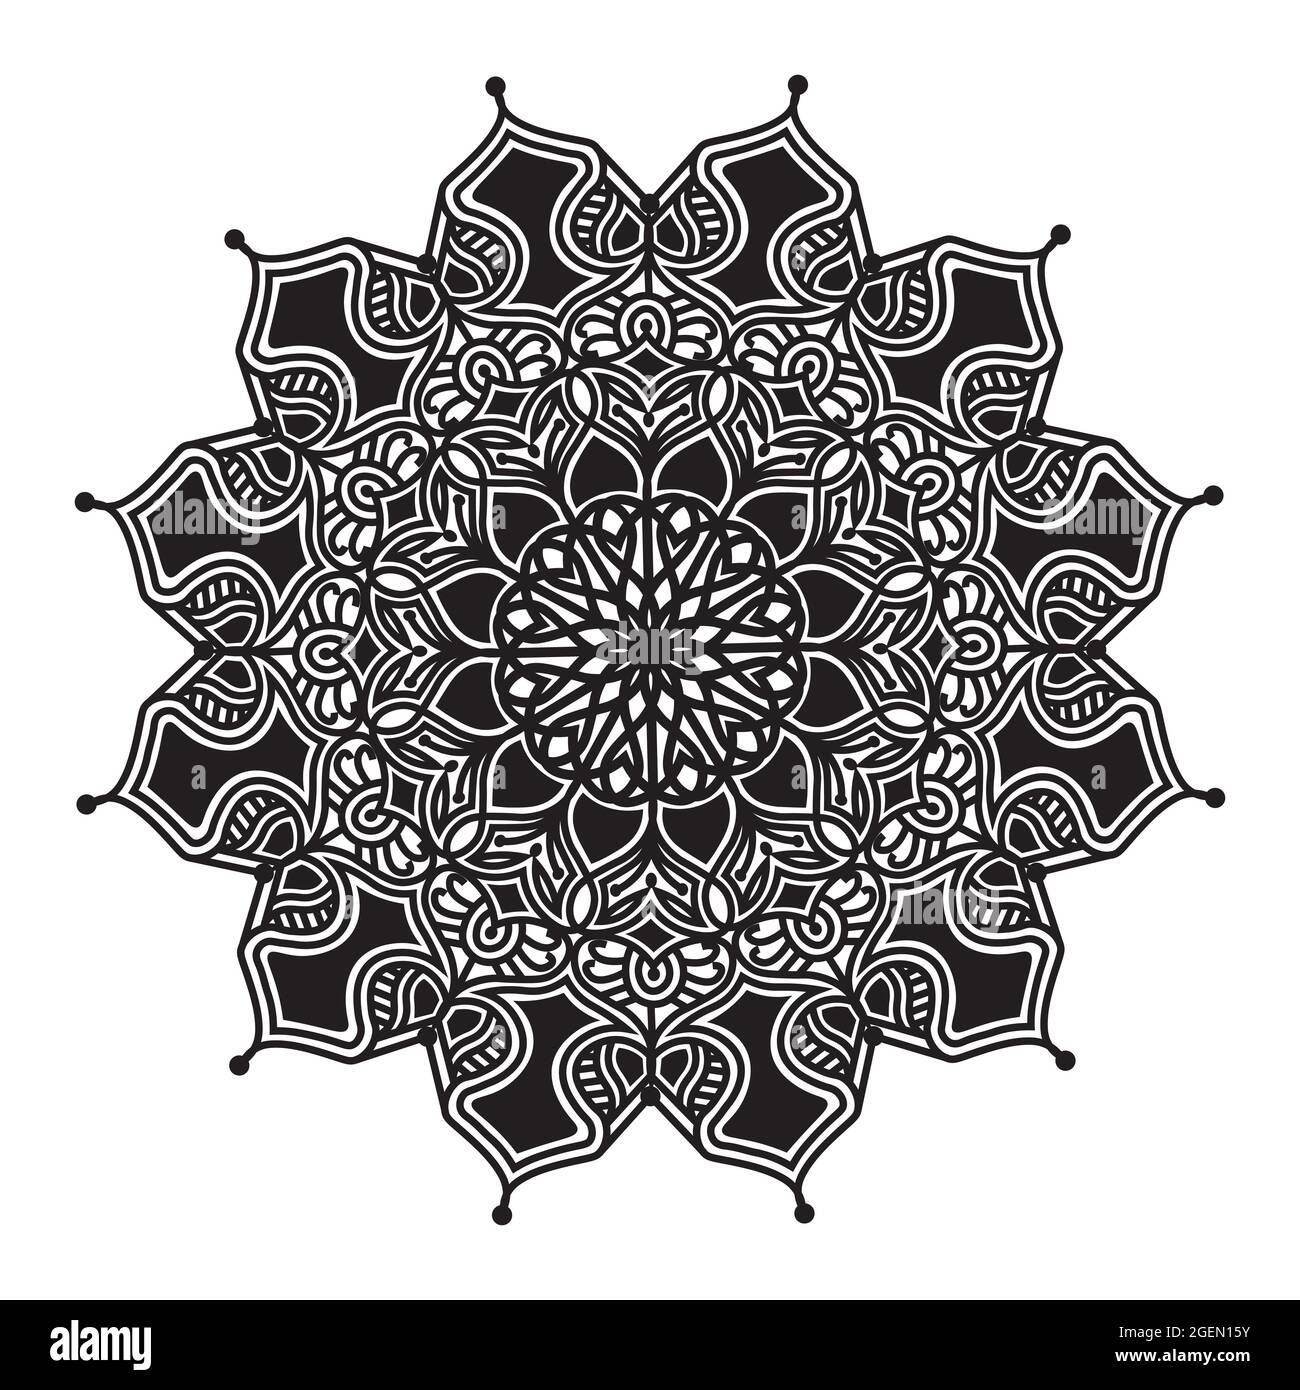 ethnic meditation relax mandala art design with floral ornamental repeat decorative background illustration Stock Vector